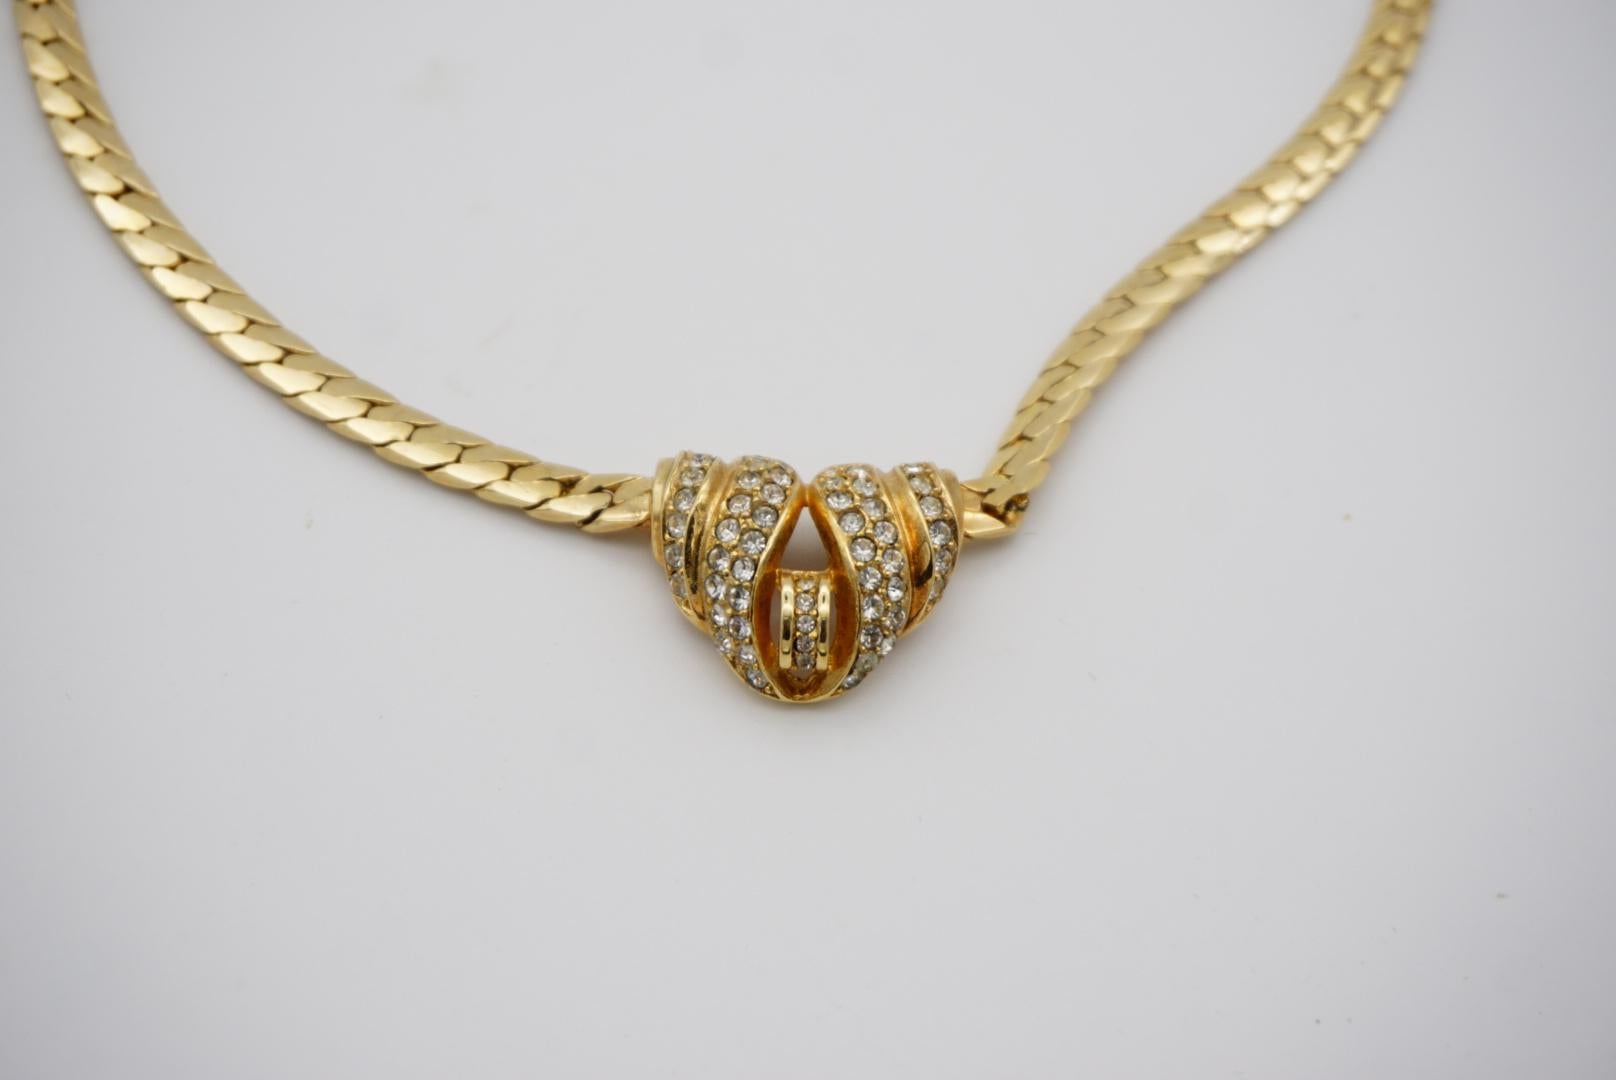 Christian Dior Vintage 1970s Croissant Interlock Crystals Pendant Gold Necklace For Sale 6